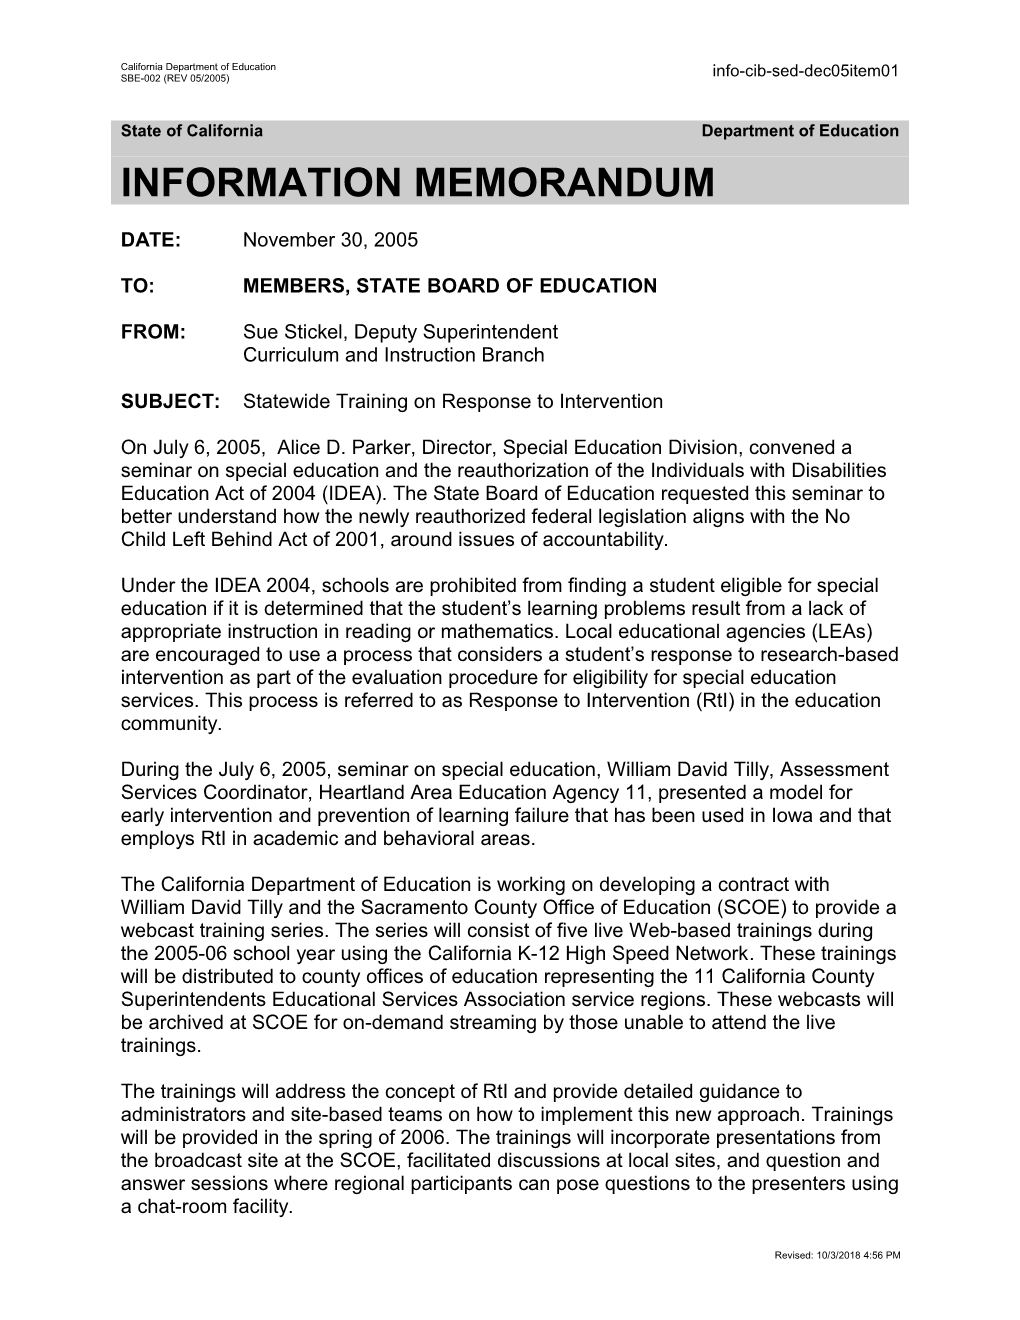 December 2005 SED Item 1 - Information Memorandum (CA State Board of Education)